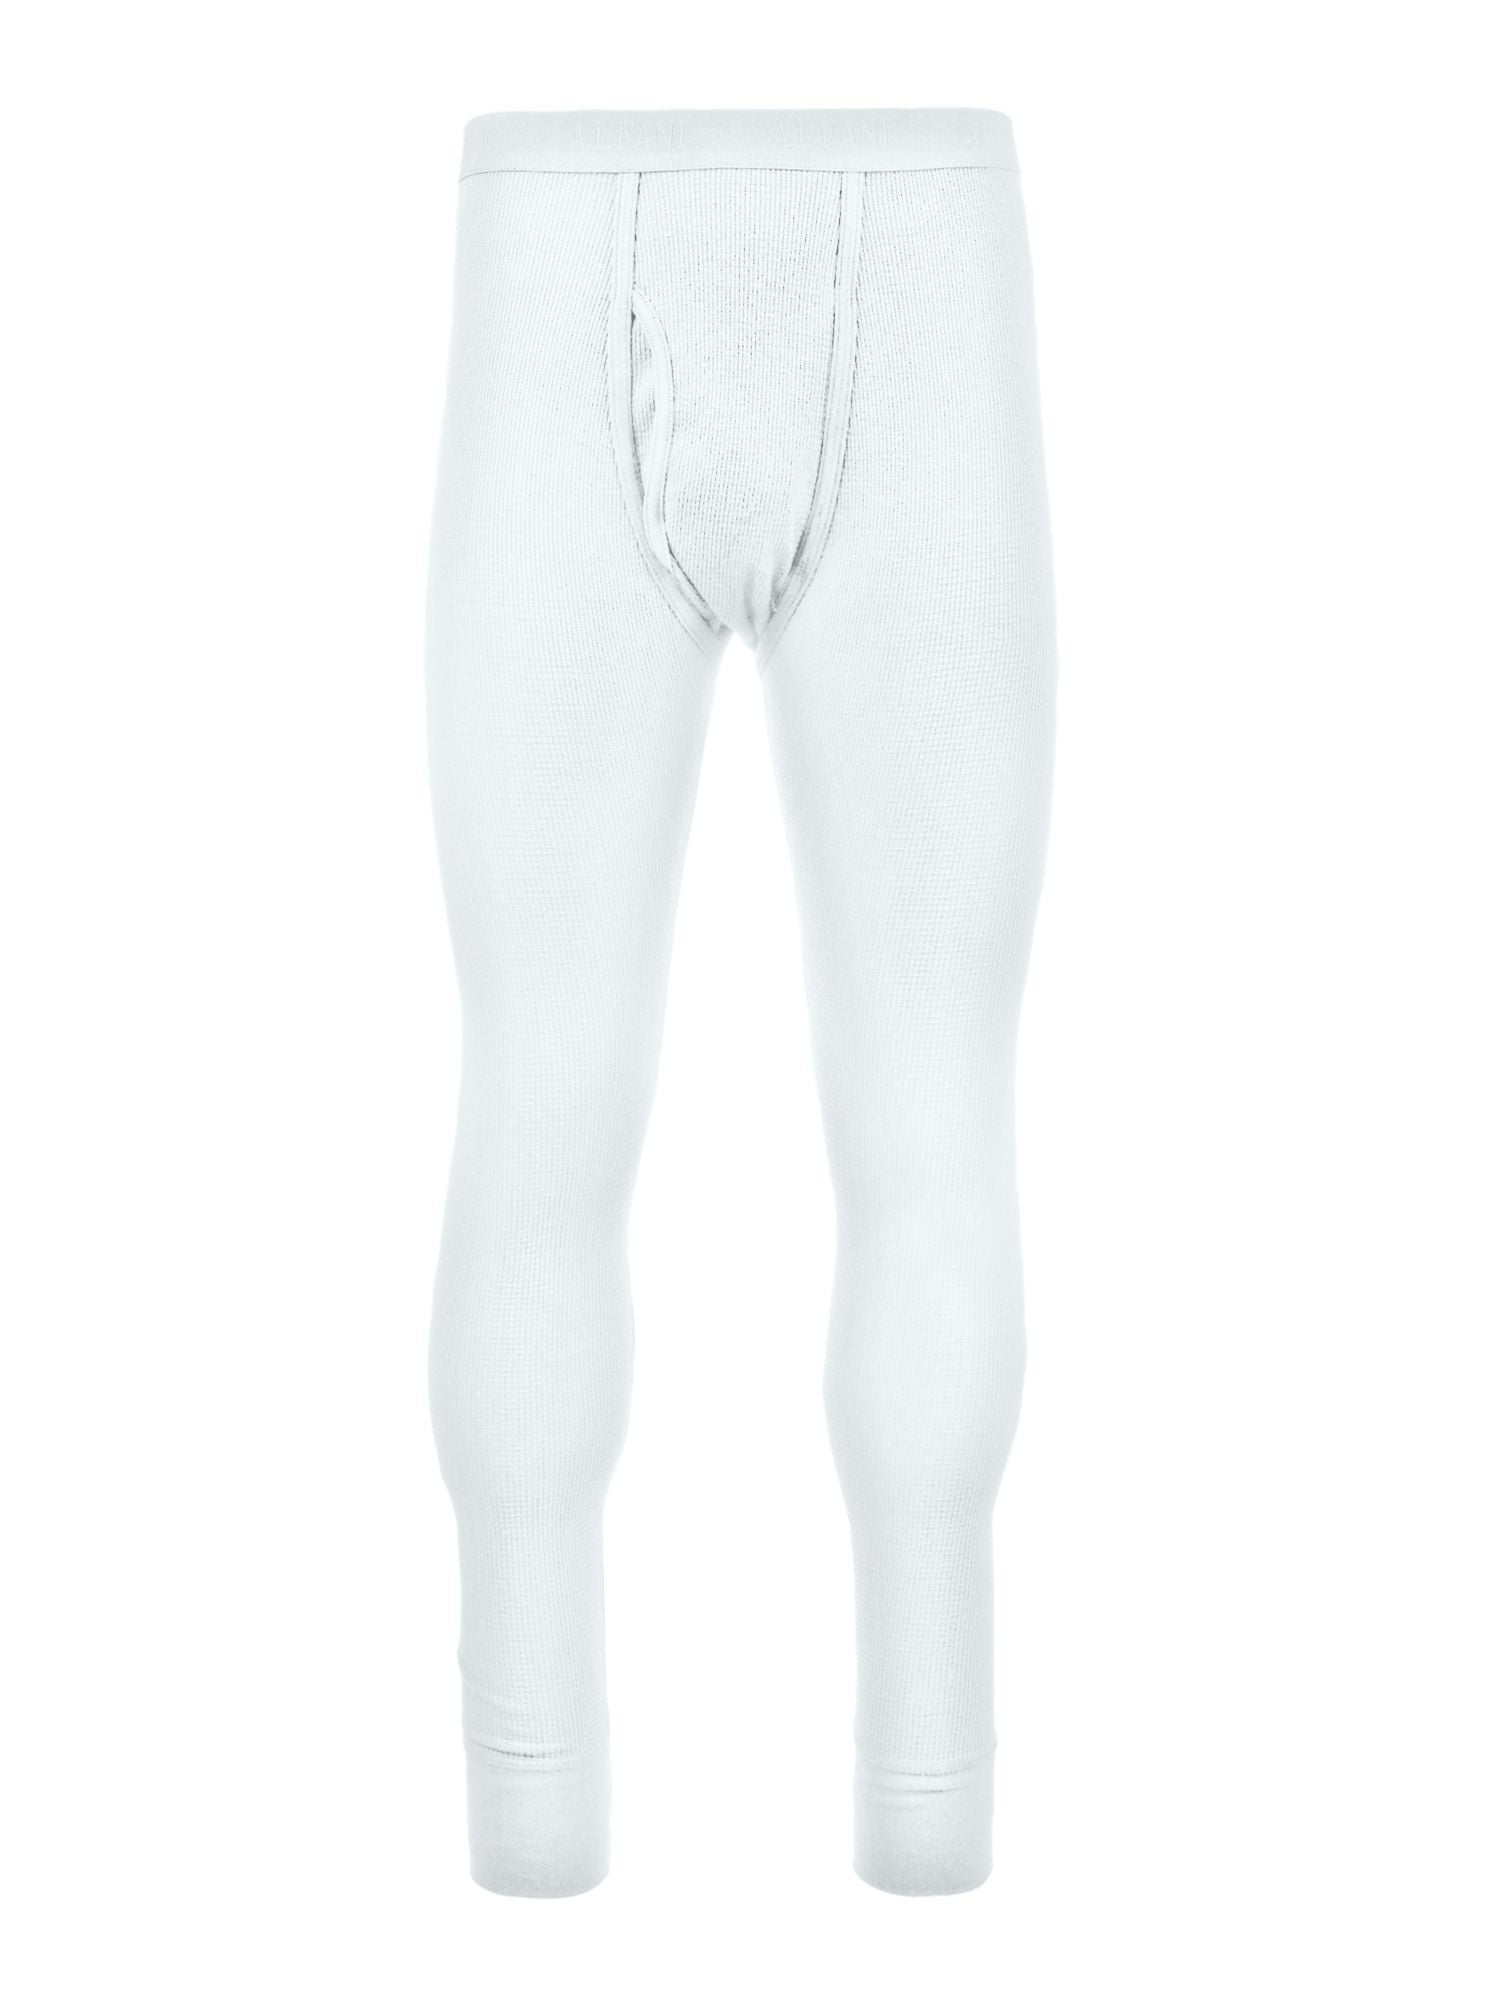 ALFANI Intimates White Thermal Underwear XXL - Walmart.com